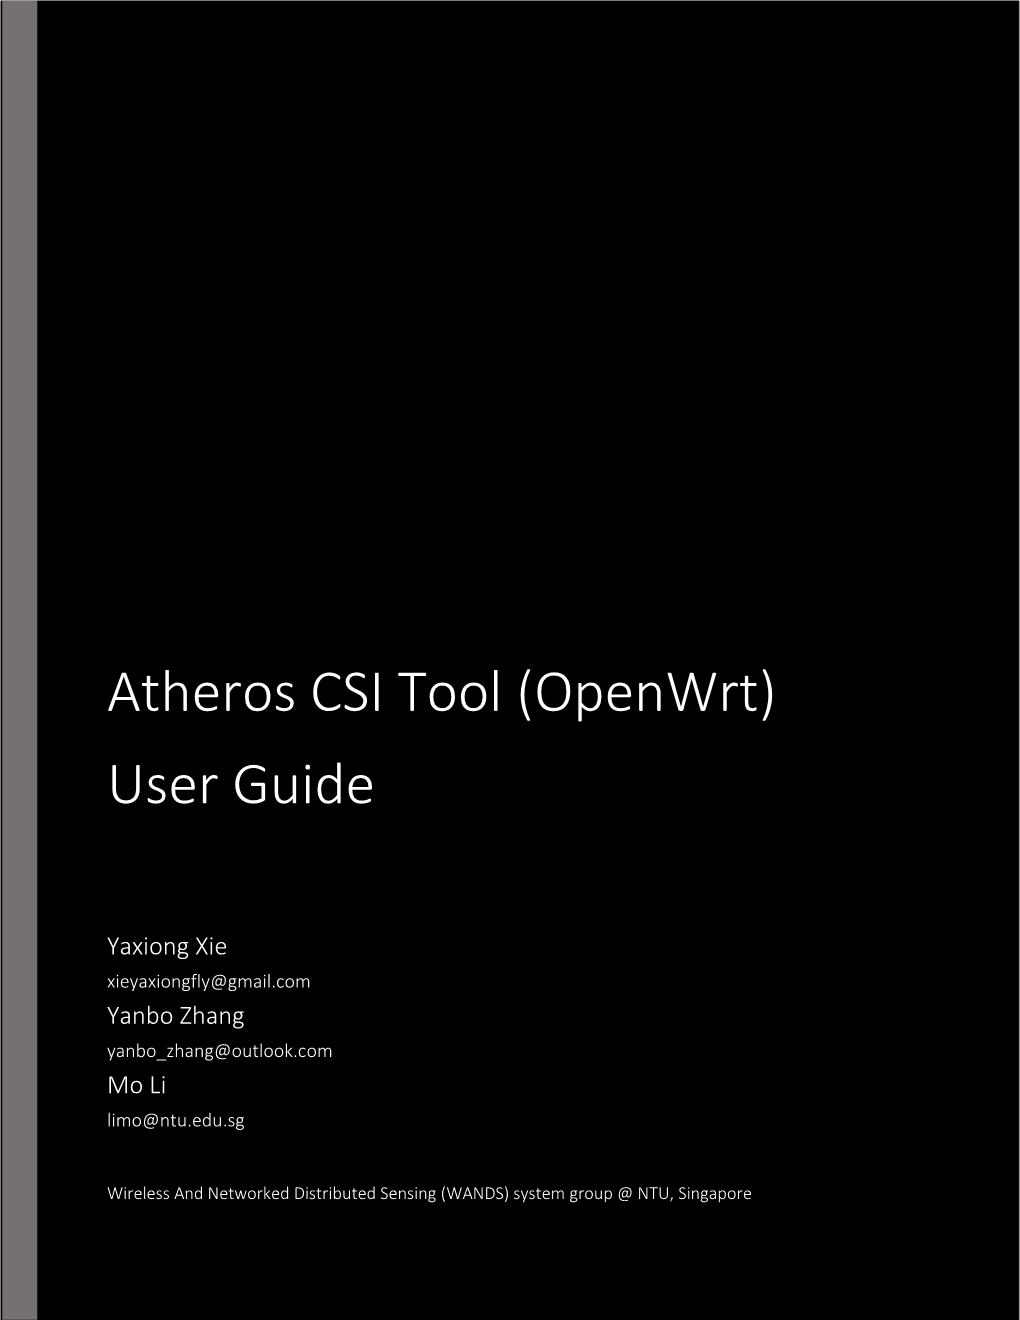 Atheros CSI Tool (Openwrt) User Guide